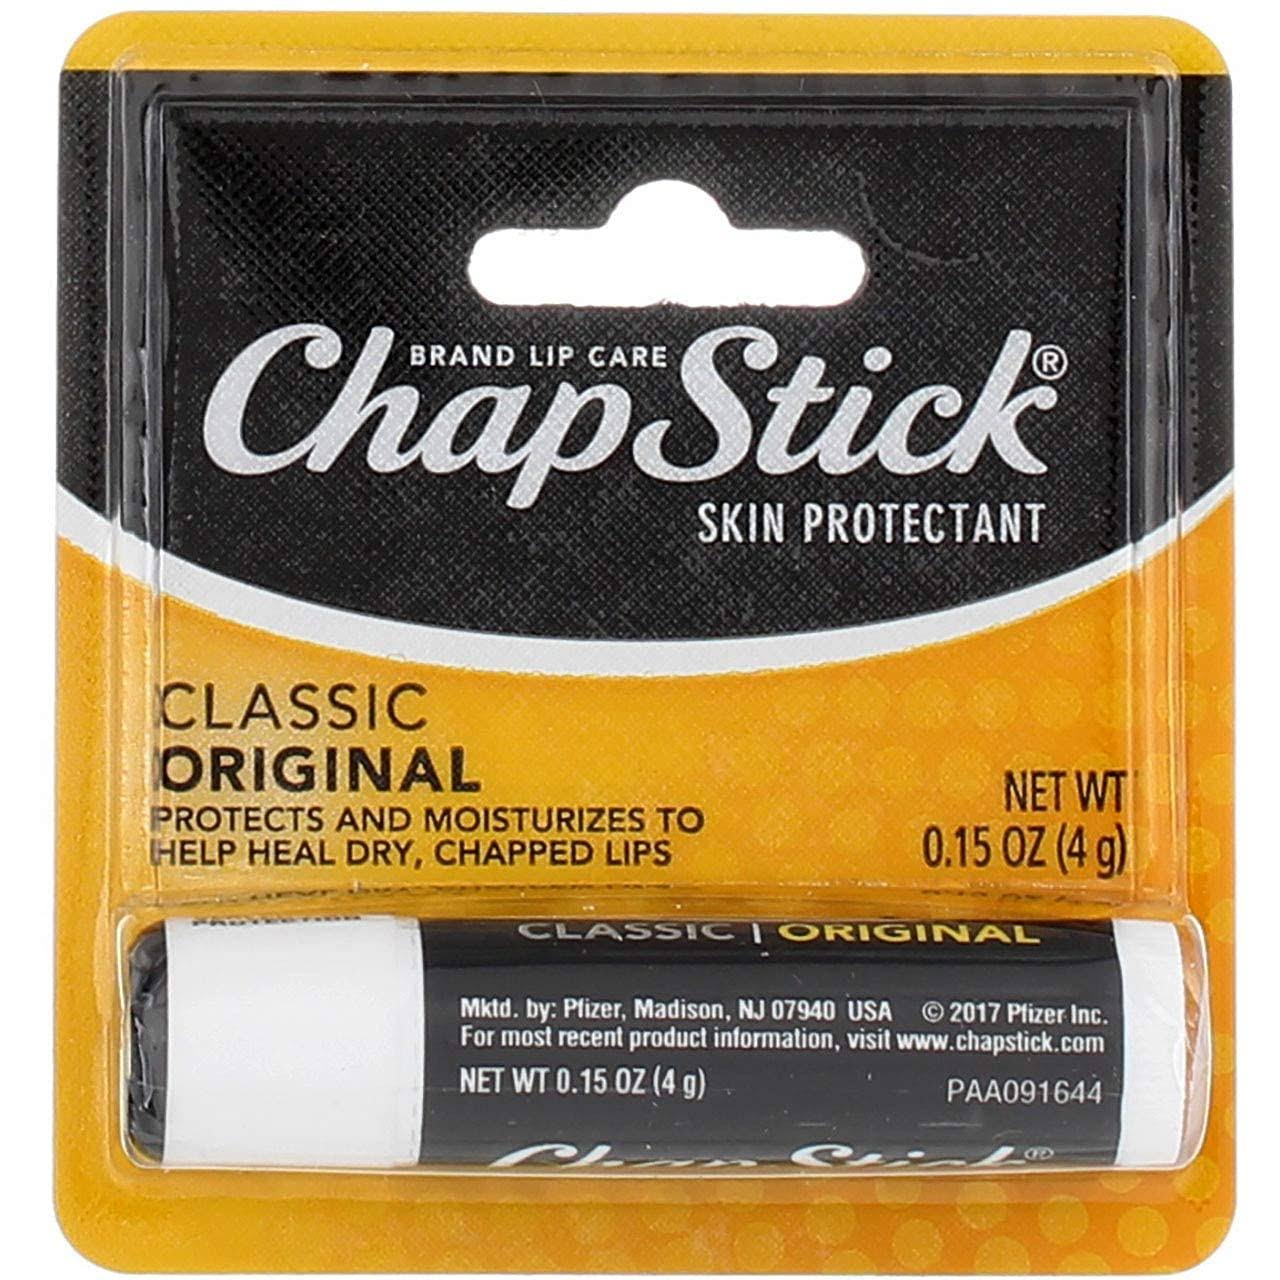 ChapStick Skin Protectant - Classic Original, 4g